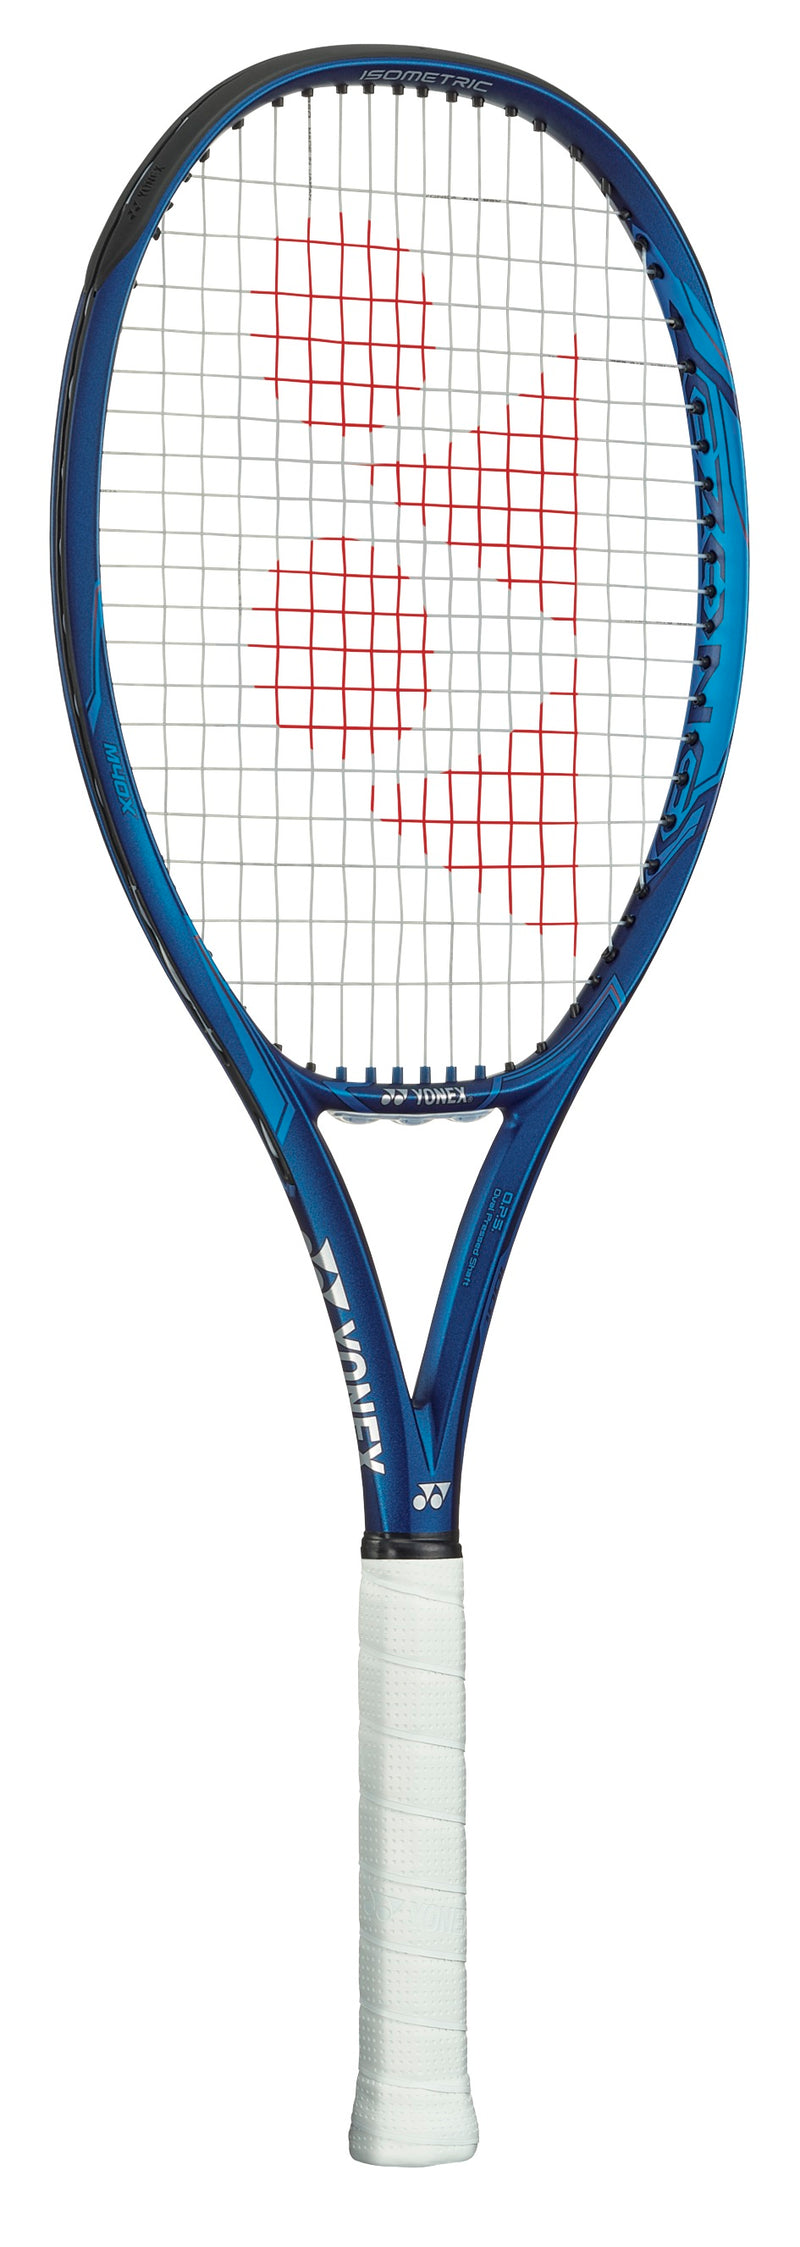 Yonex Ezone 100L 285g 4 1/4 Tennis Racquet - Deep Blue